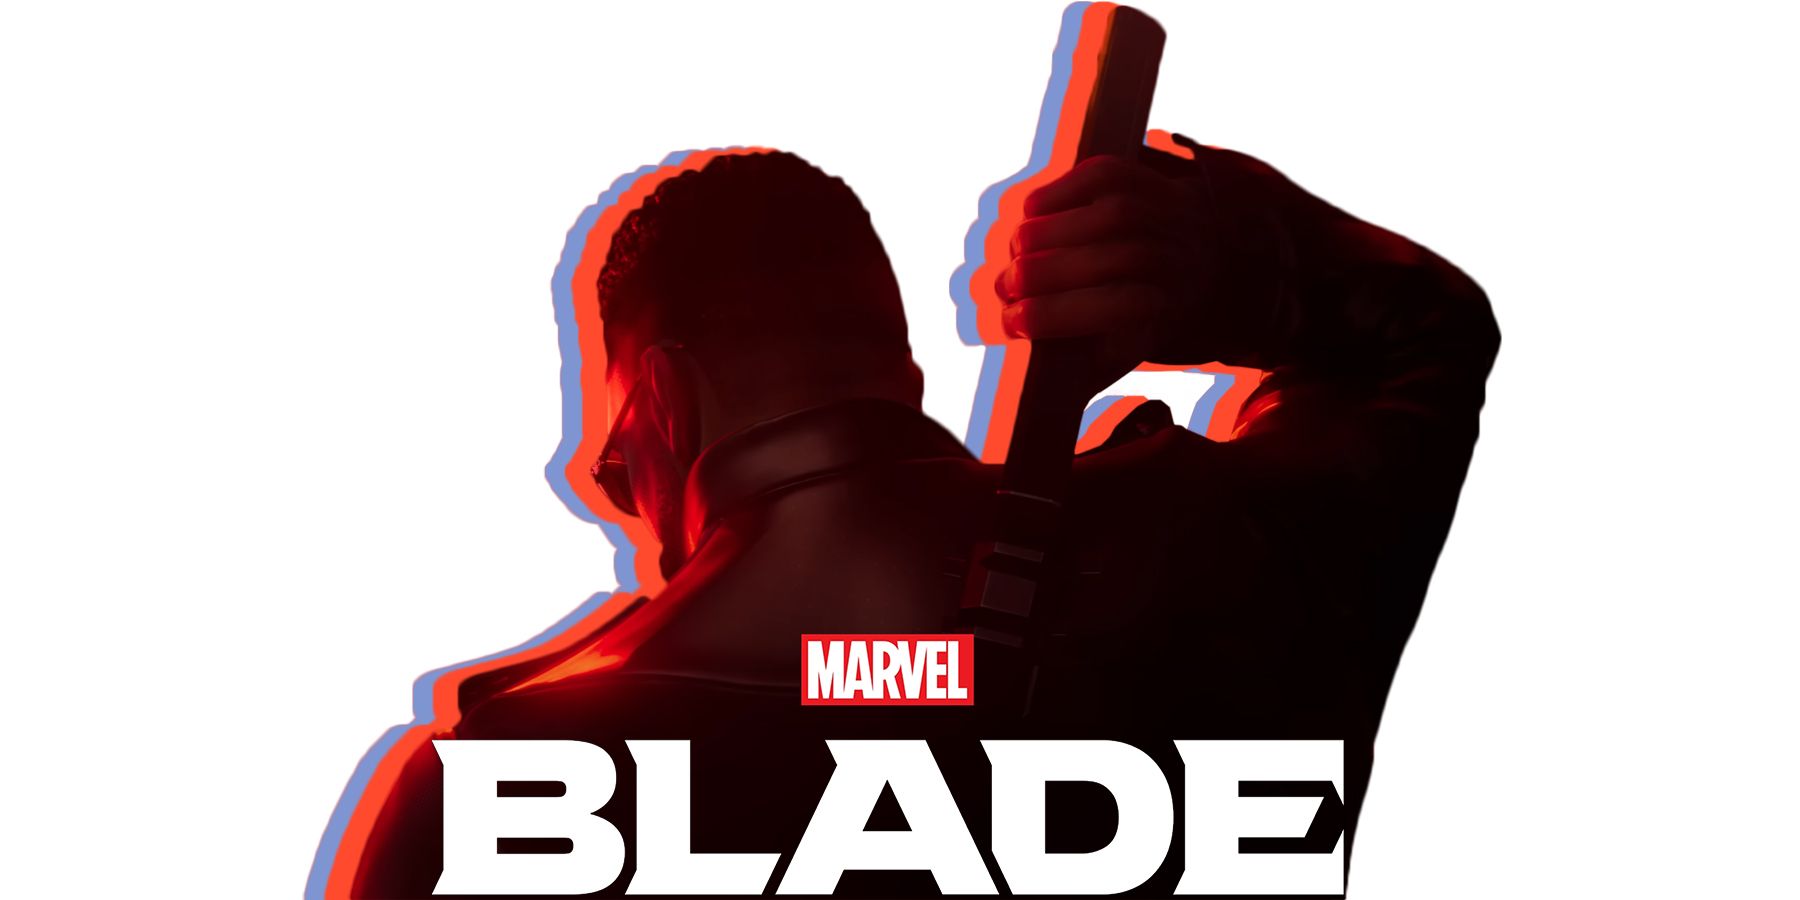 Marvel's Blade sword unsheathing simple splash screen with game logo